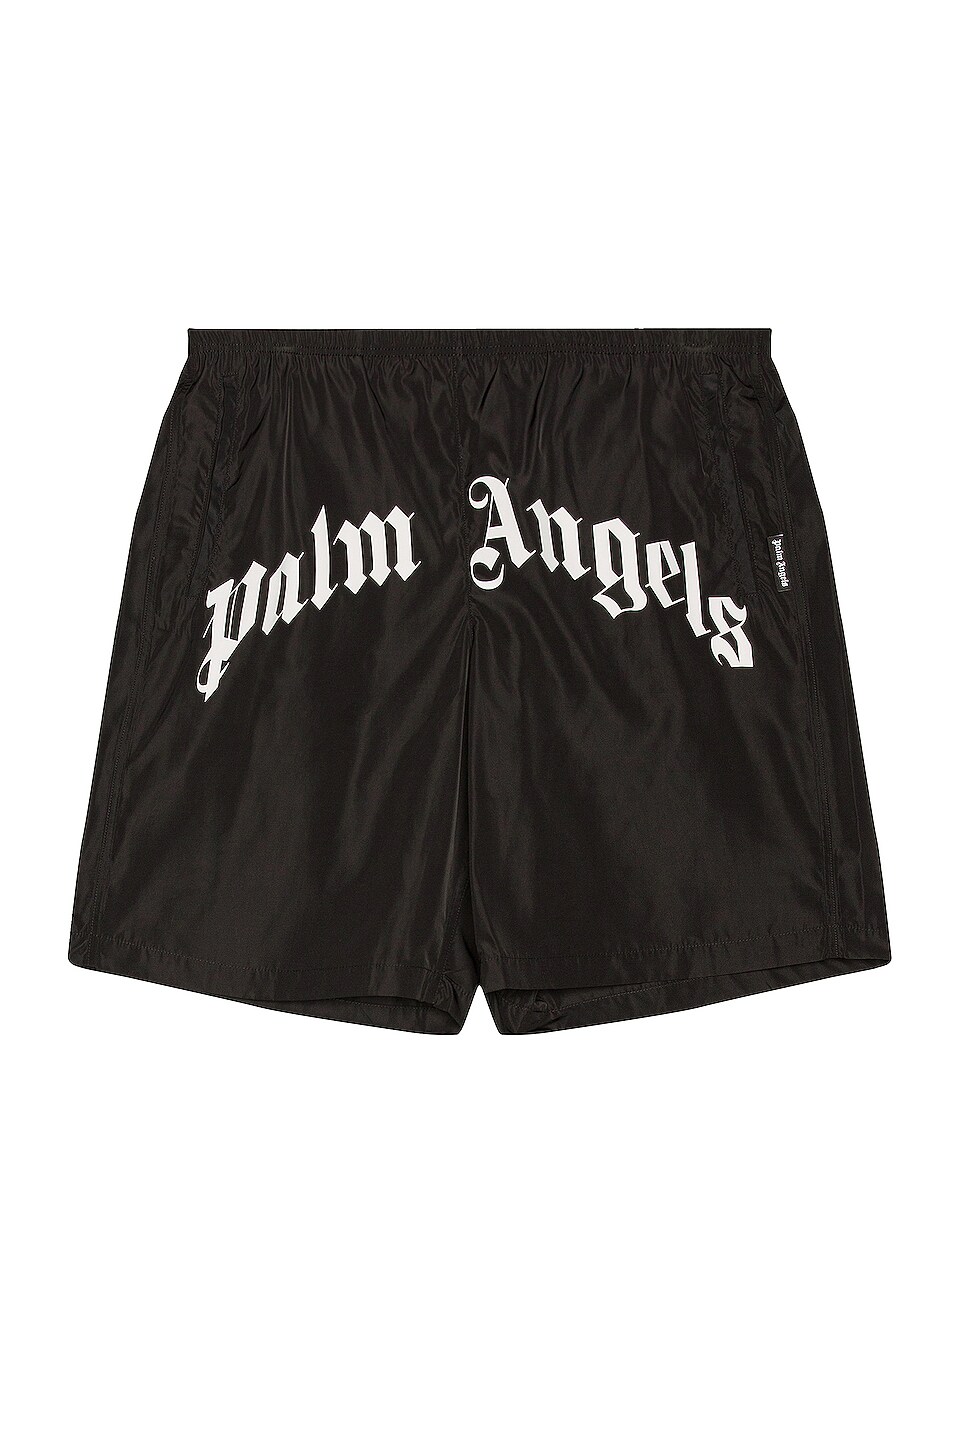 Palm Angels Curved Logo Swim Short in Black & White | REVOLVE